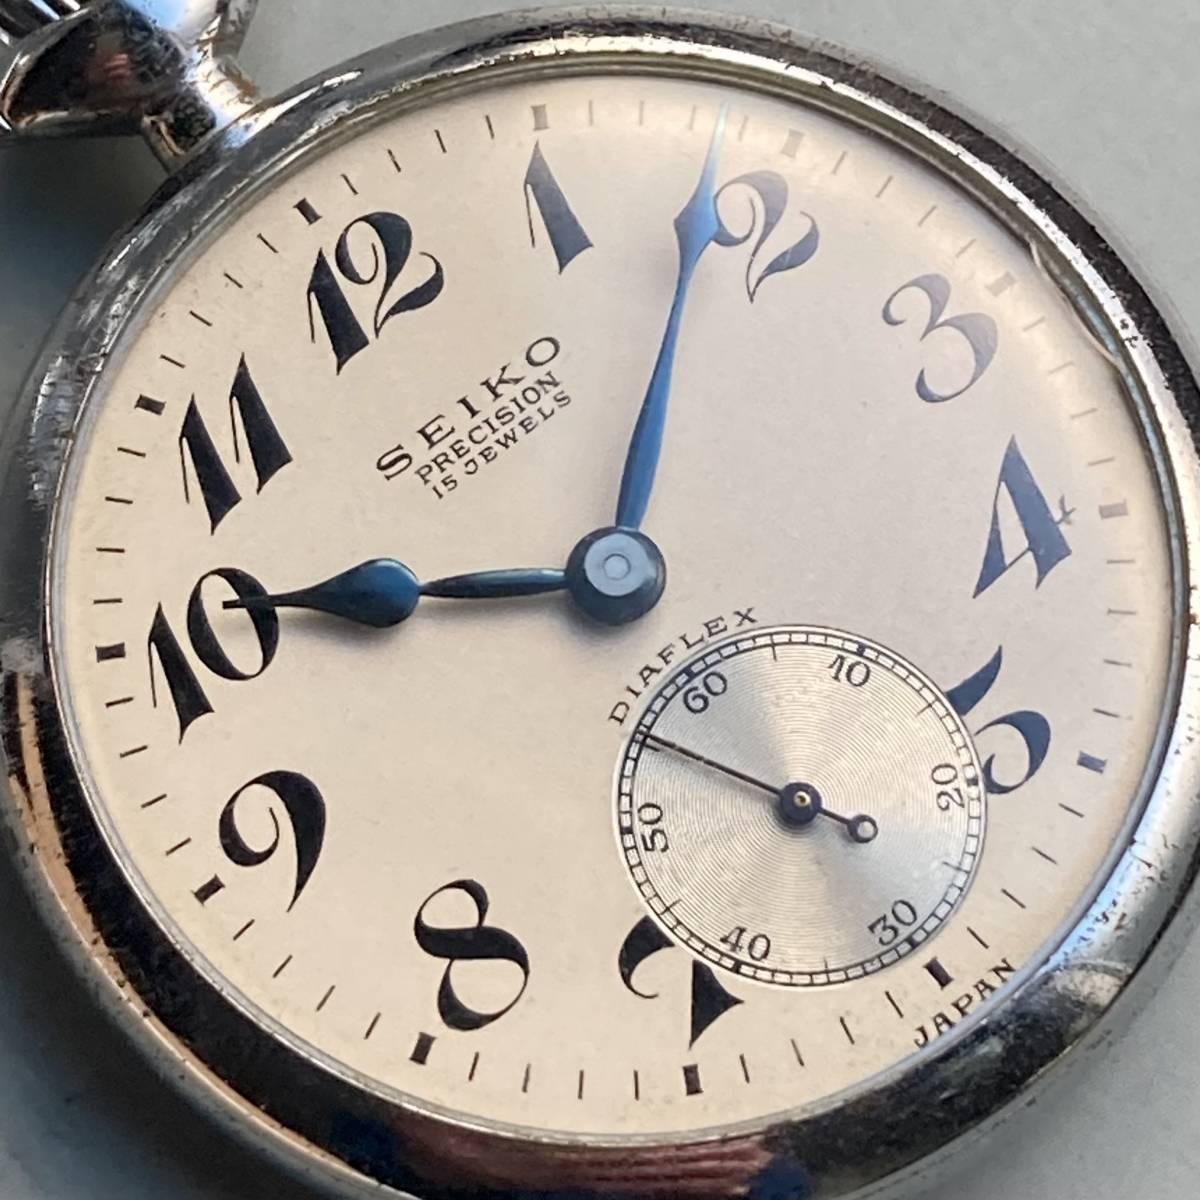 Seiko Pocket Watch Antique Railroad Silver 49mm Vintage - Murphy Johnson Watches Co.